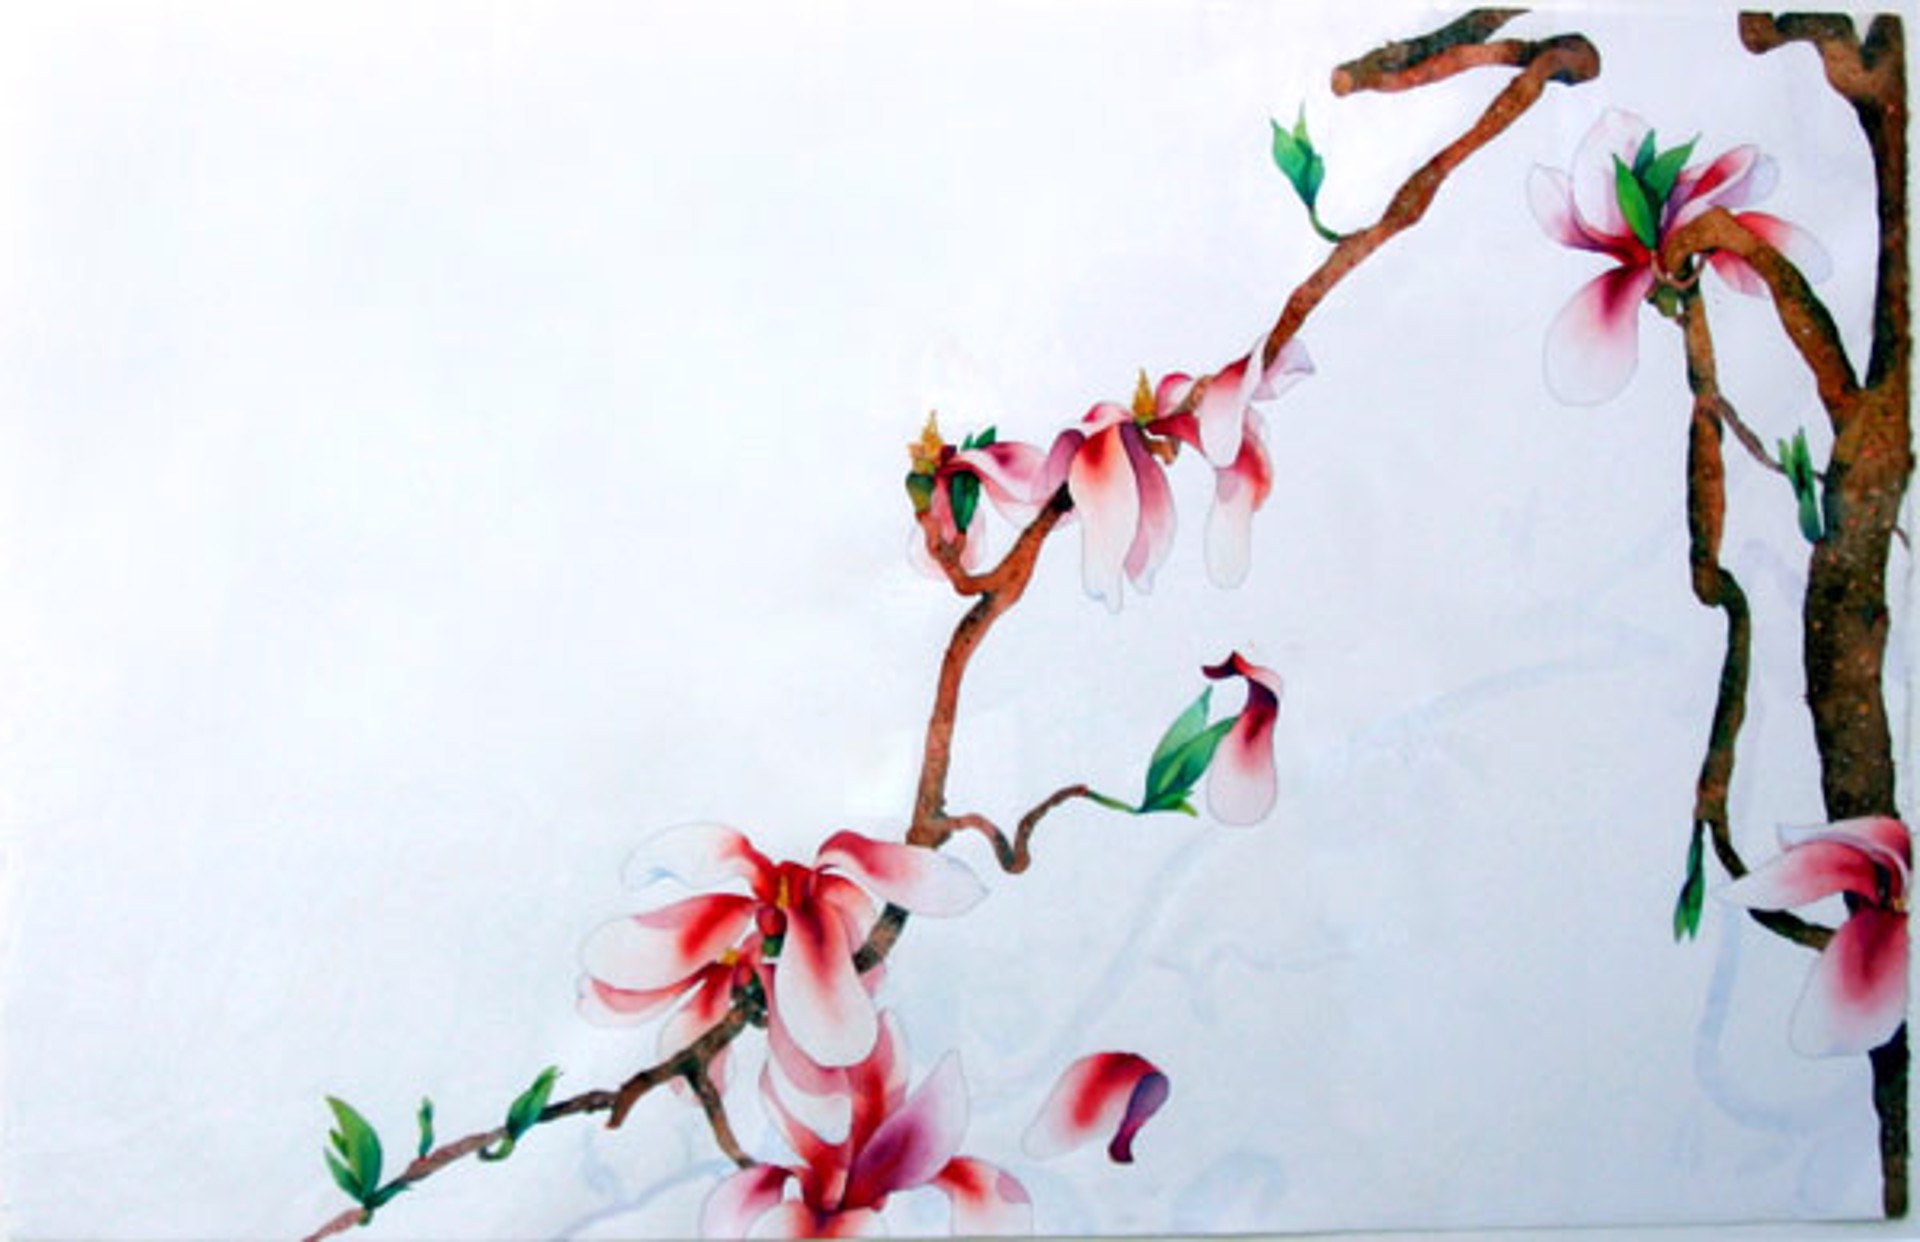 Untitled - Flowers on Vine by Robert Sinclair